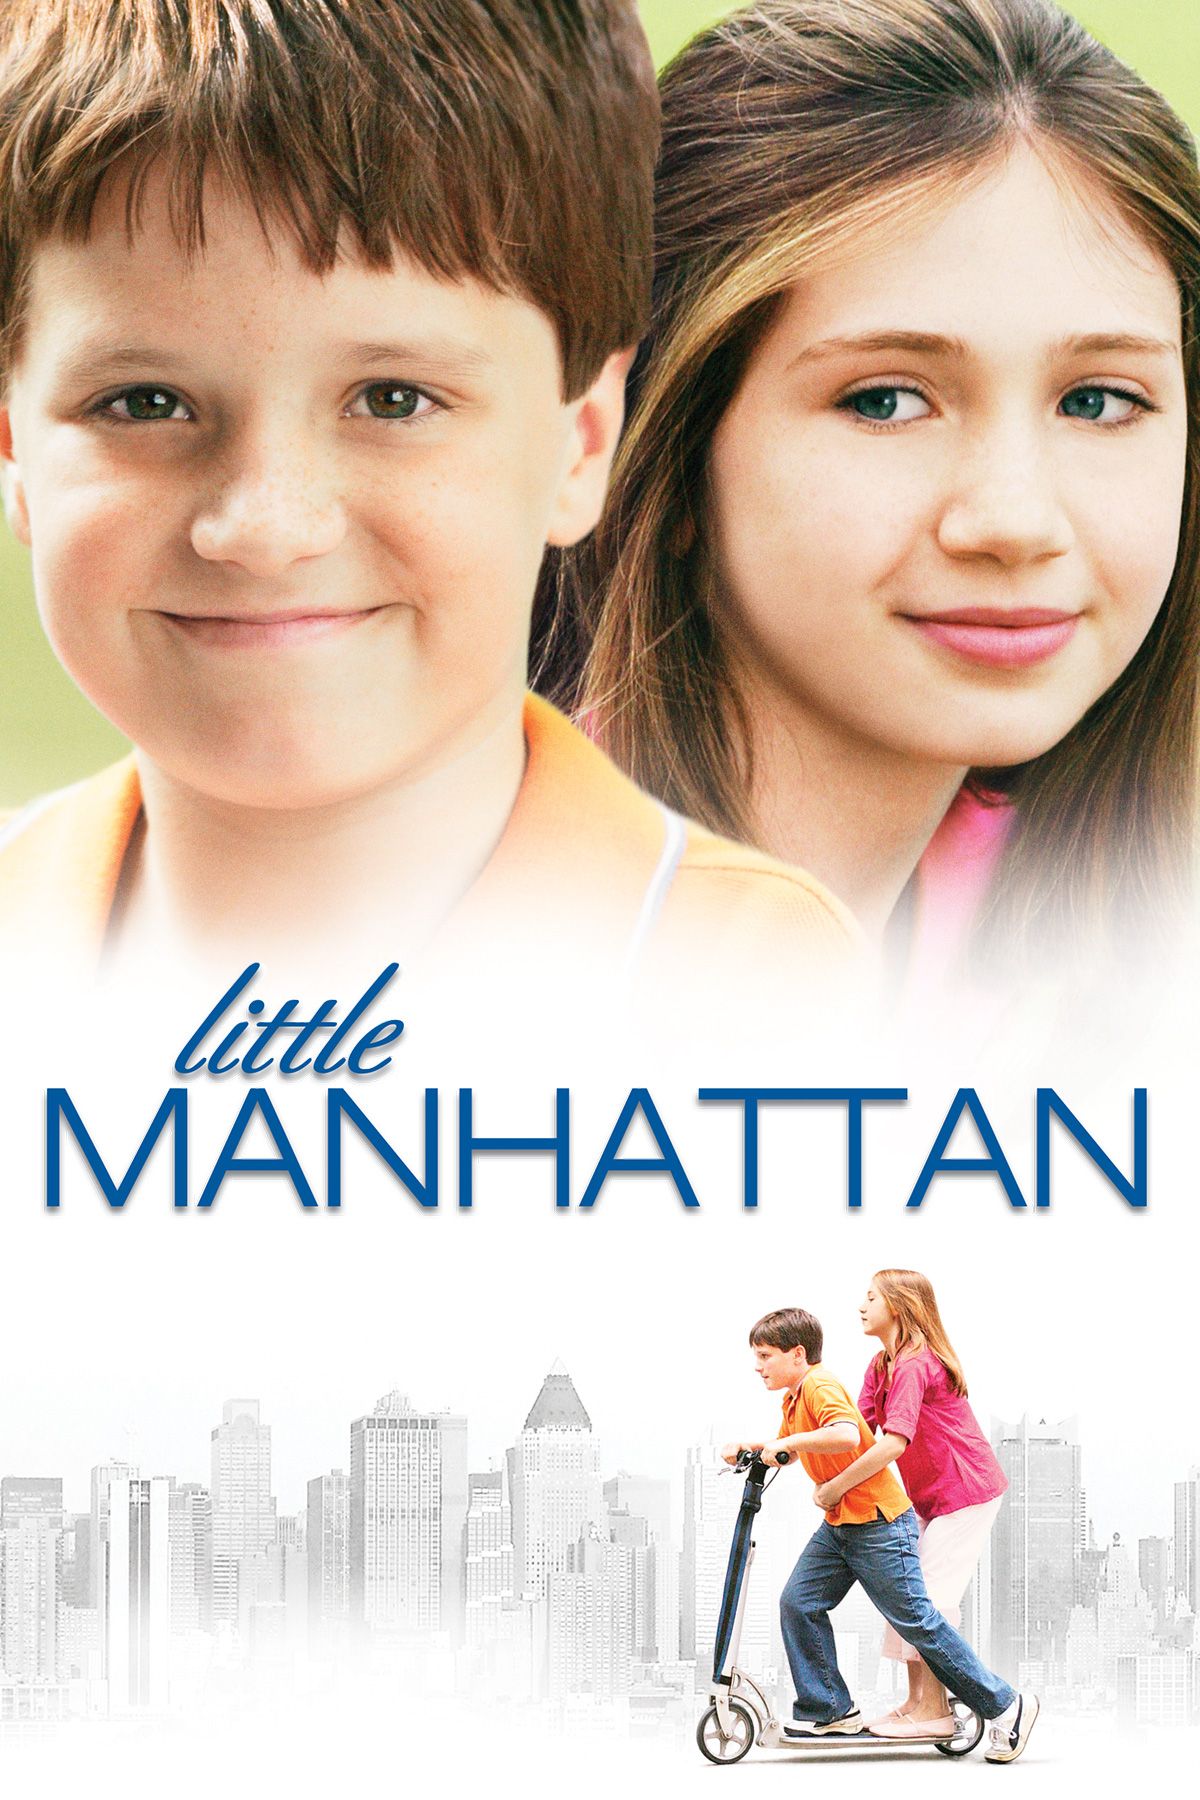 dietra burton recommends little manhattan full movie pic